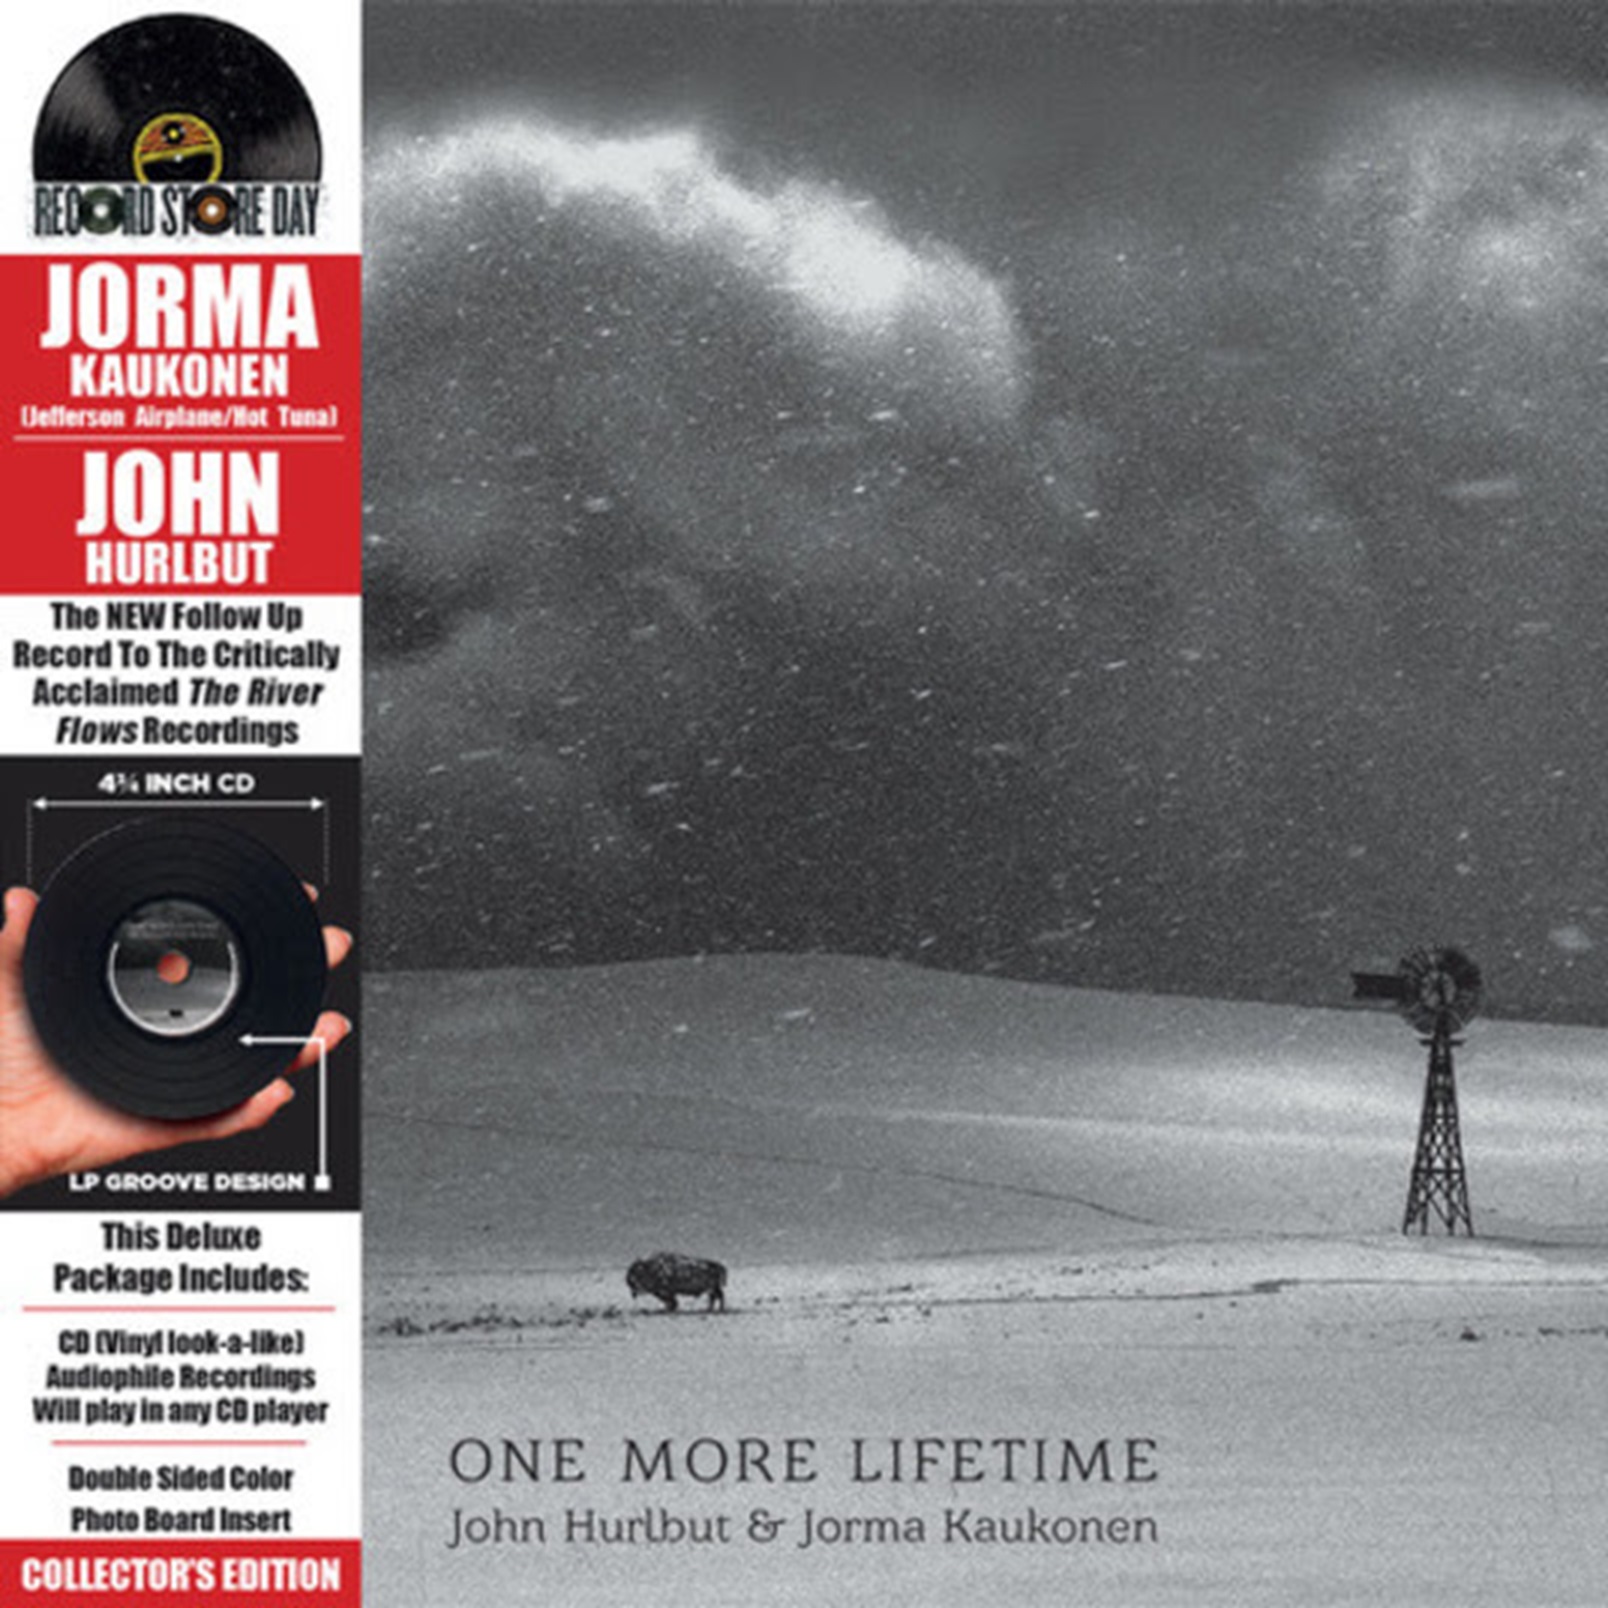 Get Out! Jorma Kaukonen & John Hurlbut drop new vinyl on Record Store Day